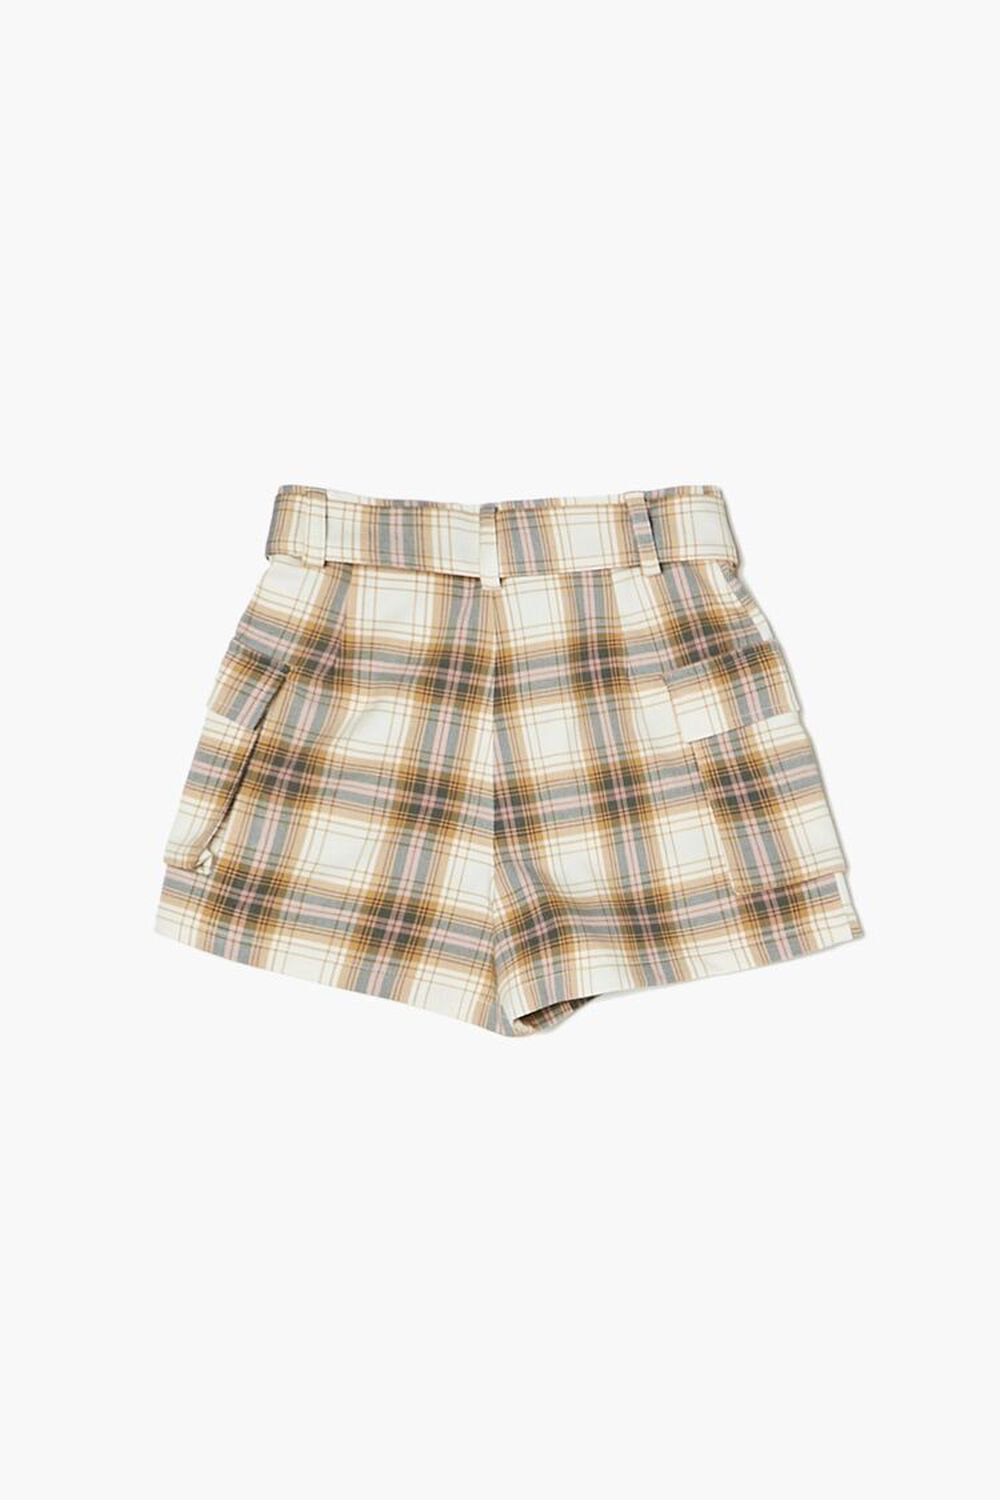 TAUPE/MULTI Girls Belted Plaid Shorts (Kids), image 2